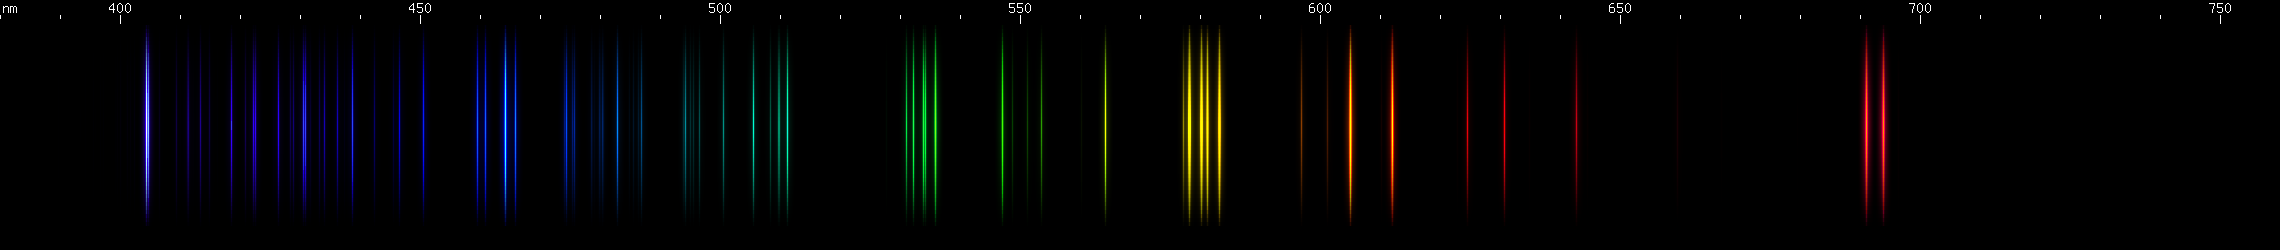 Spectral Lines of Potassium